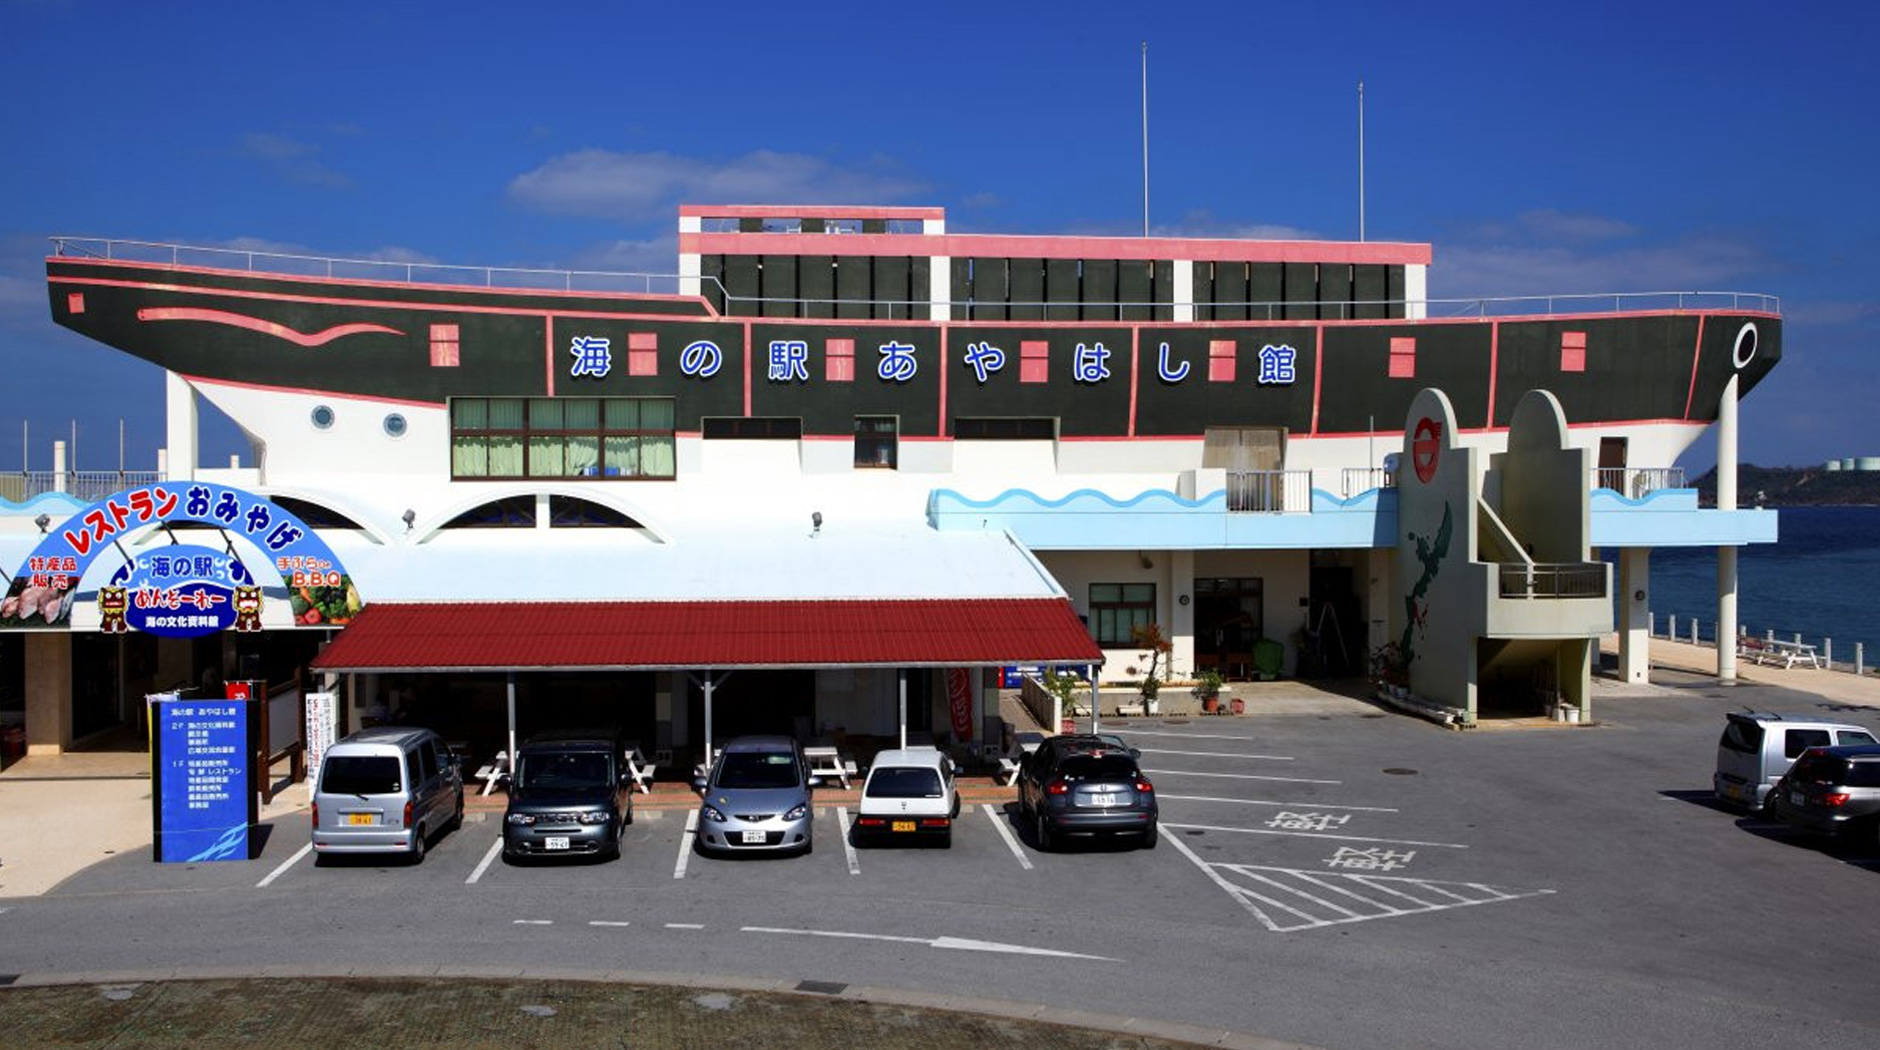 Marine Station Ayahashi Kan